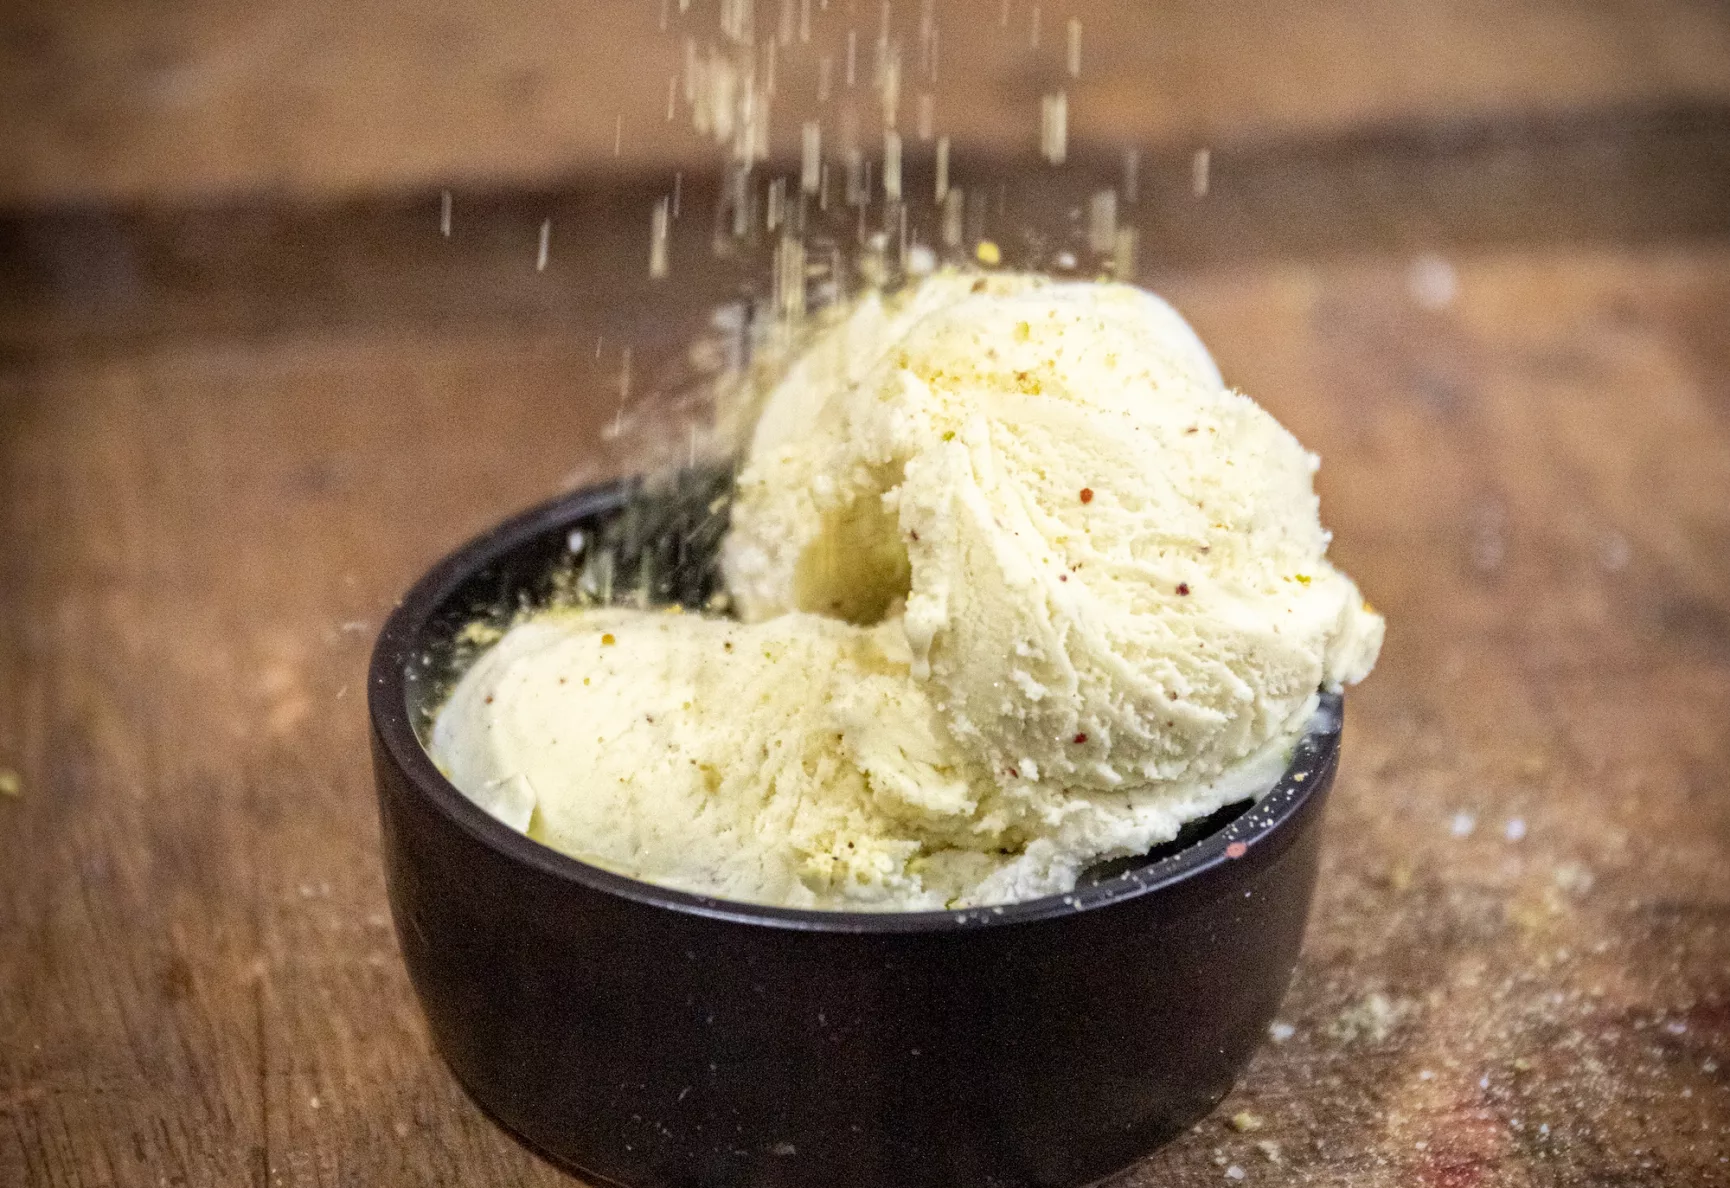 Pistachio crumb sprinkled over gelato